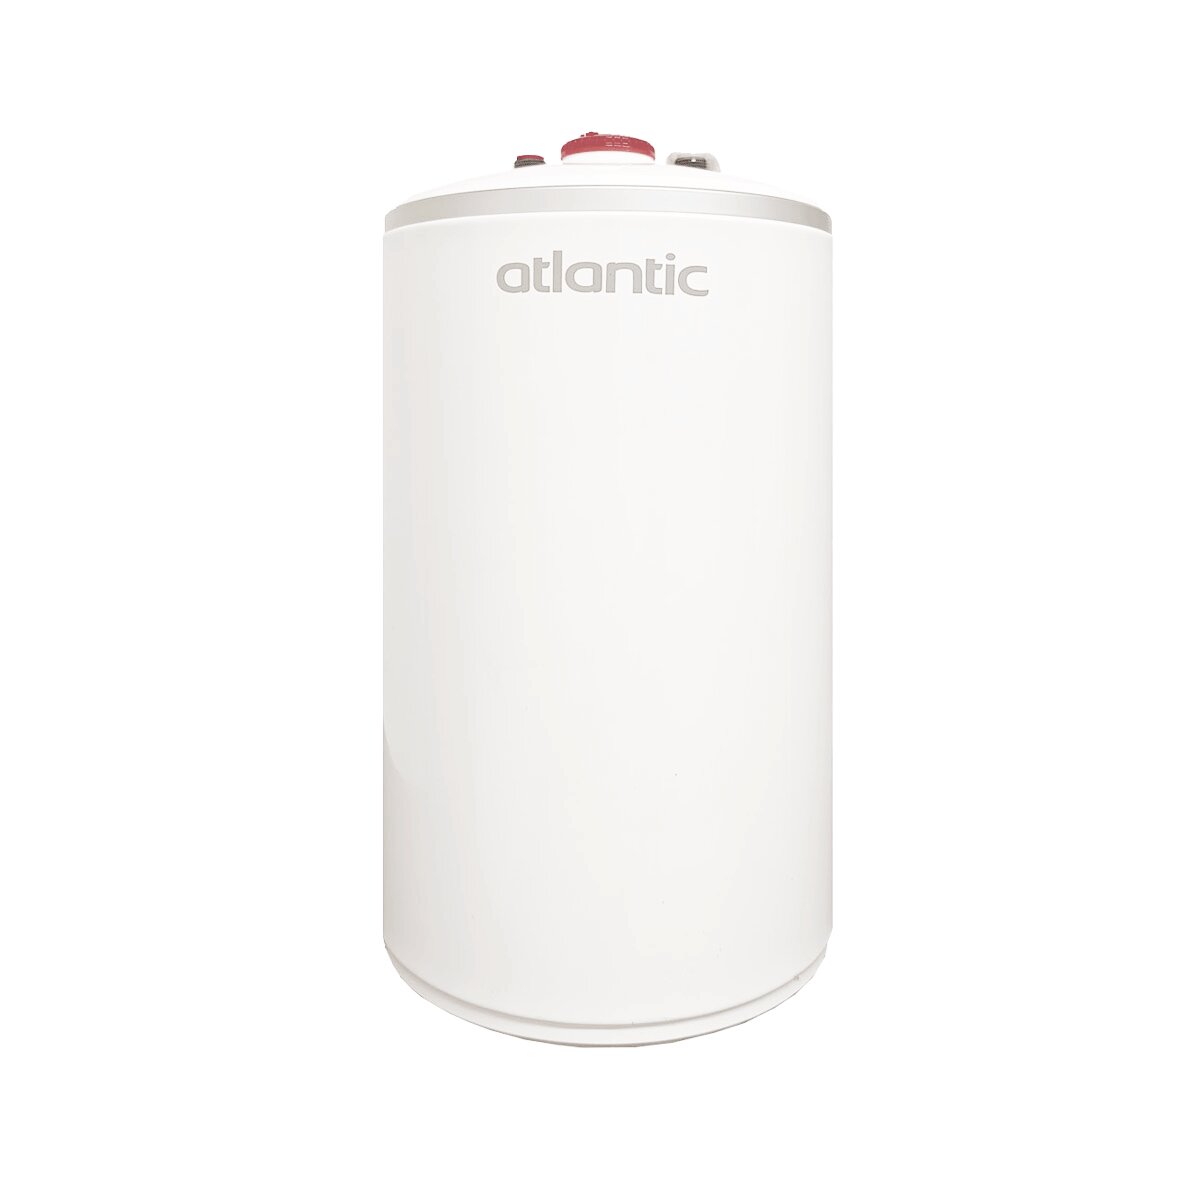 EGO Atlantic 10 liter rapid undersink electric water heater, 2 year warranty